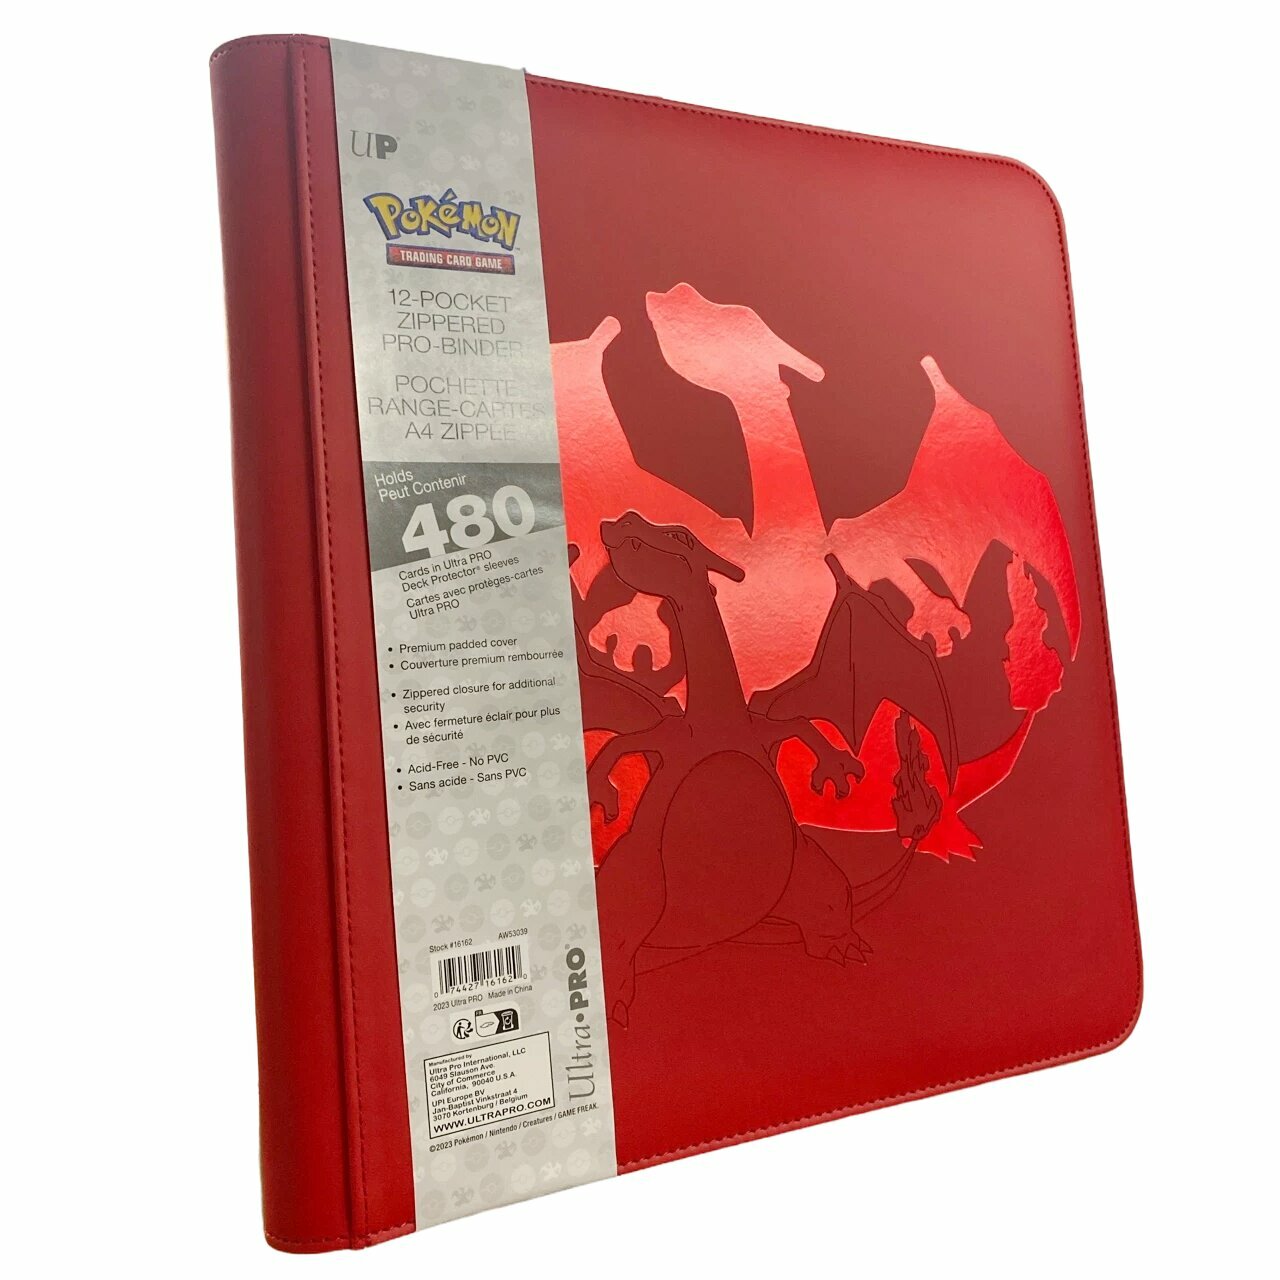 The Pokémon Company UltraPRO: Pokémon Elite Series Charizard Album 12-pocket Zippered Pro-Binder